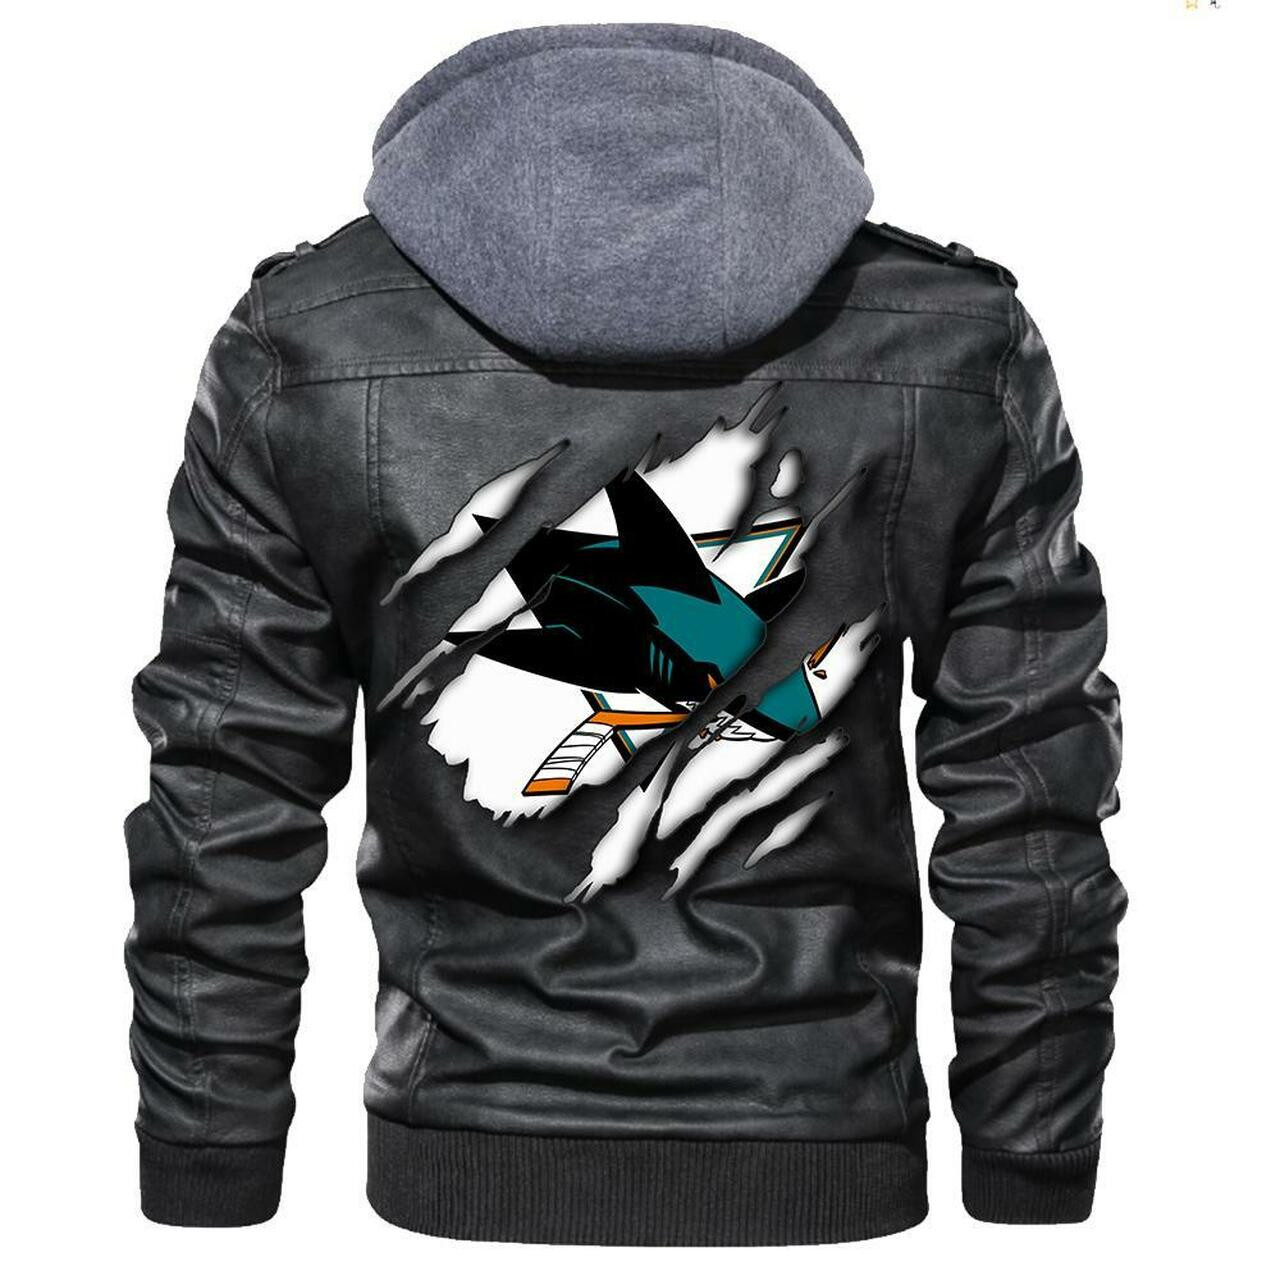 Top leather jacket Sells Best on Techcomshop 164